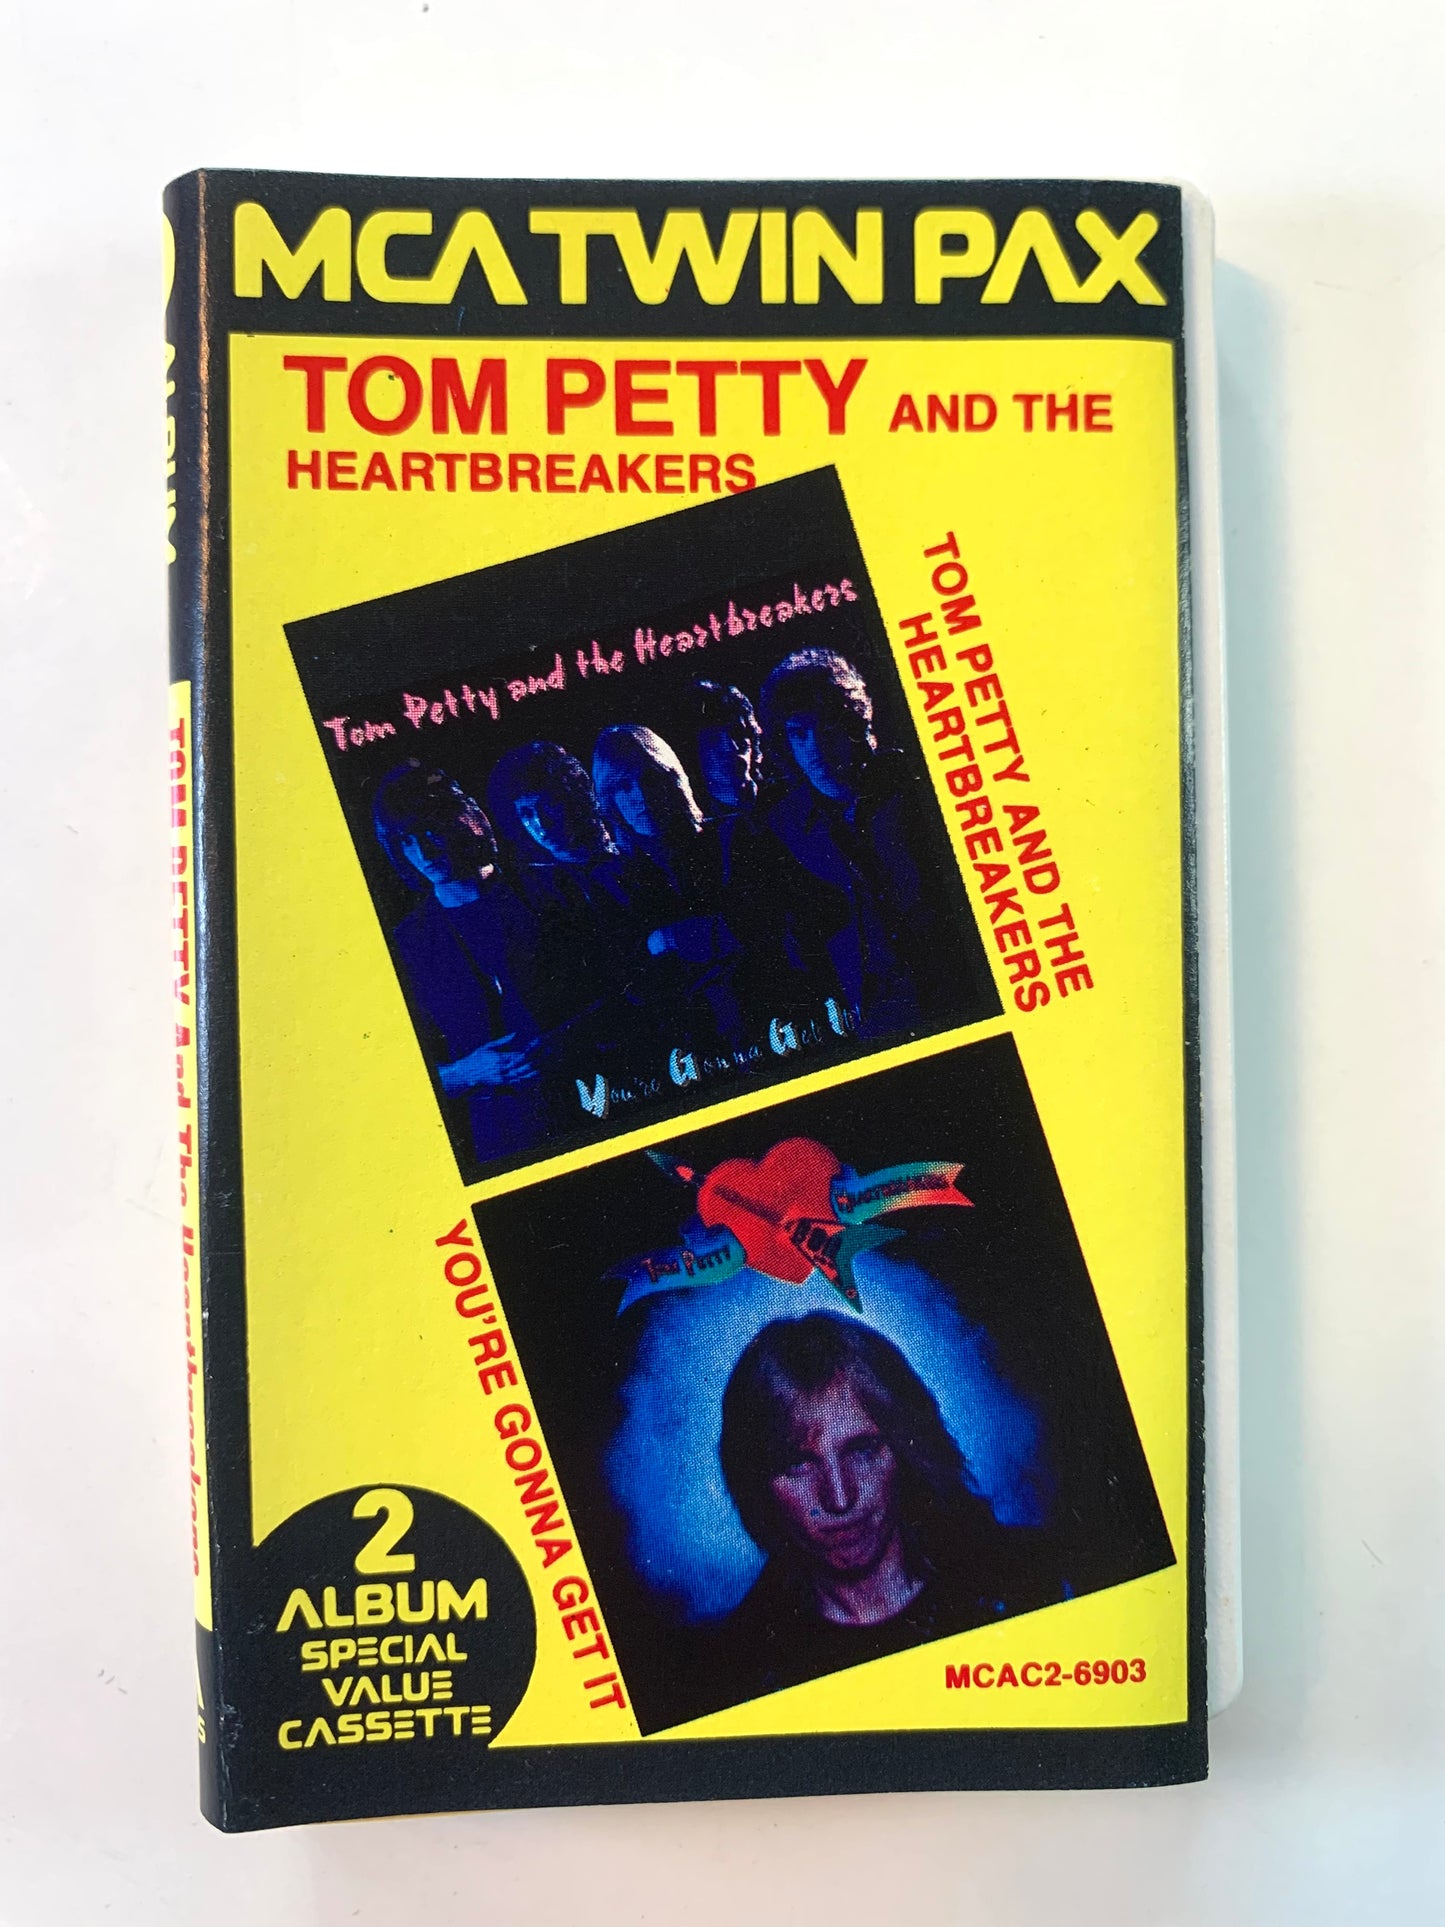 Tom Petty and the Heartbreakers, 2 Album cassette